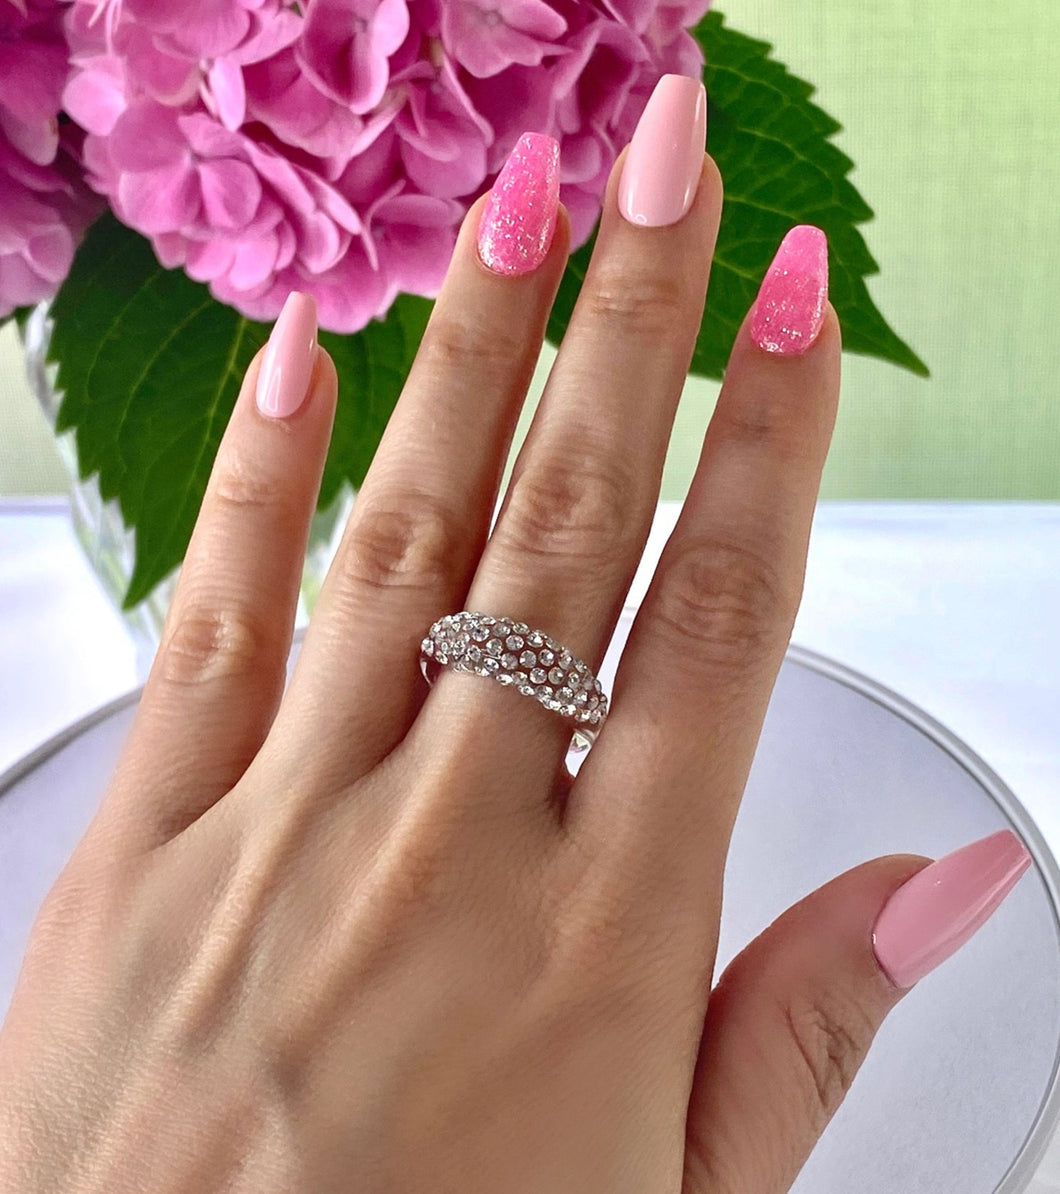 Clear Acrylic Ring With Crystal Rhinestones